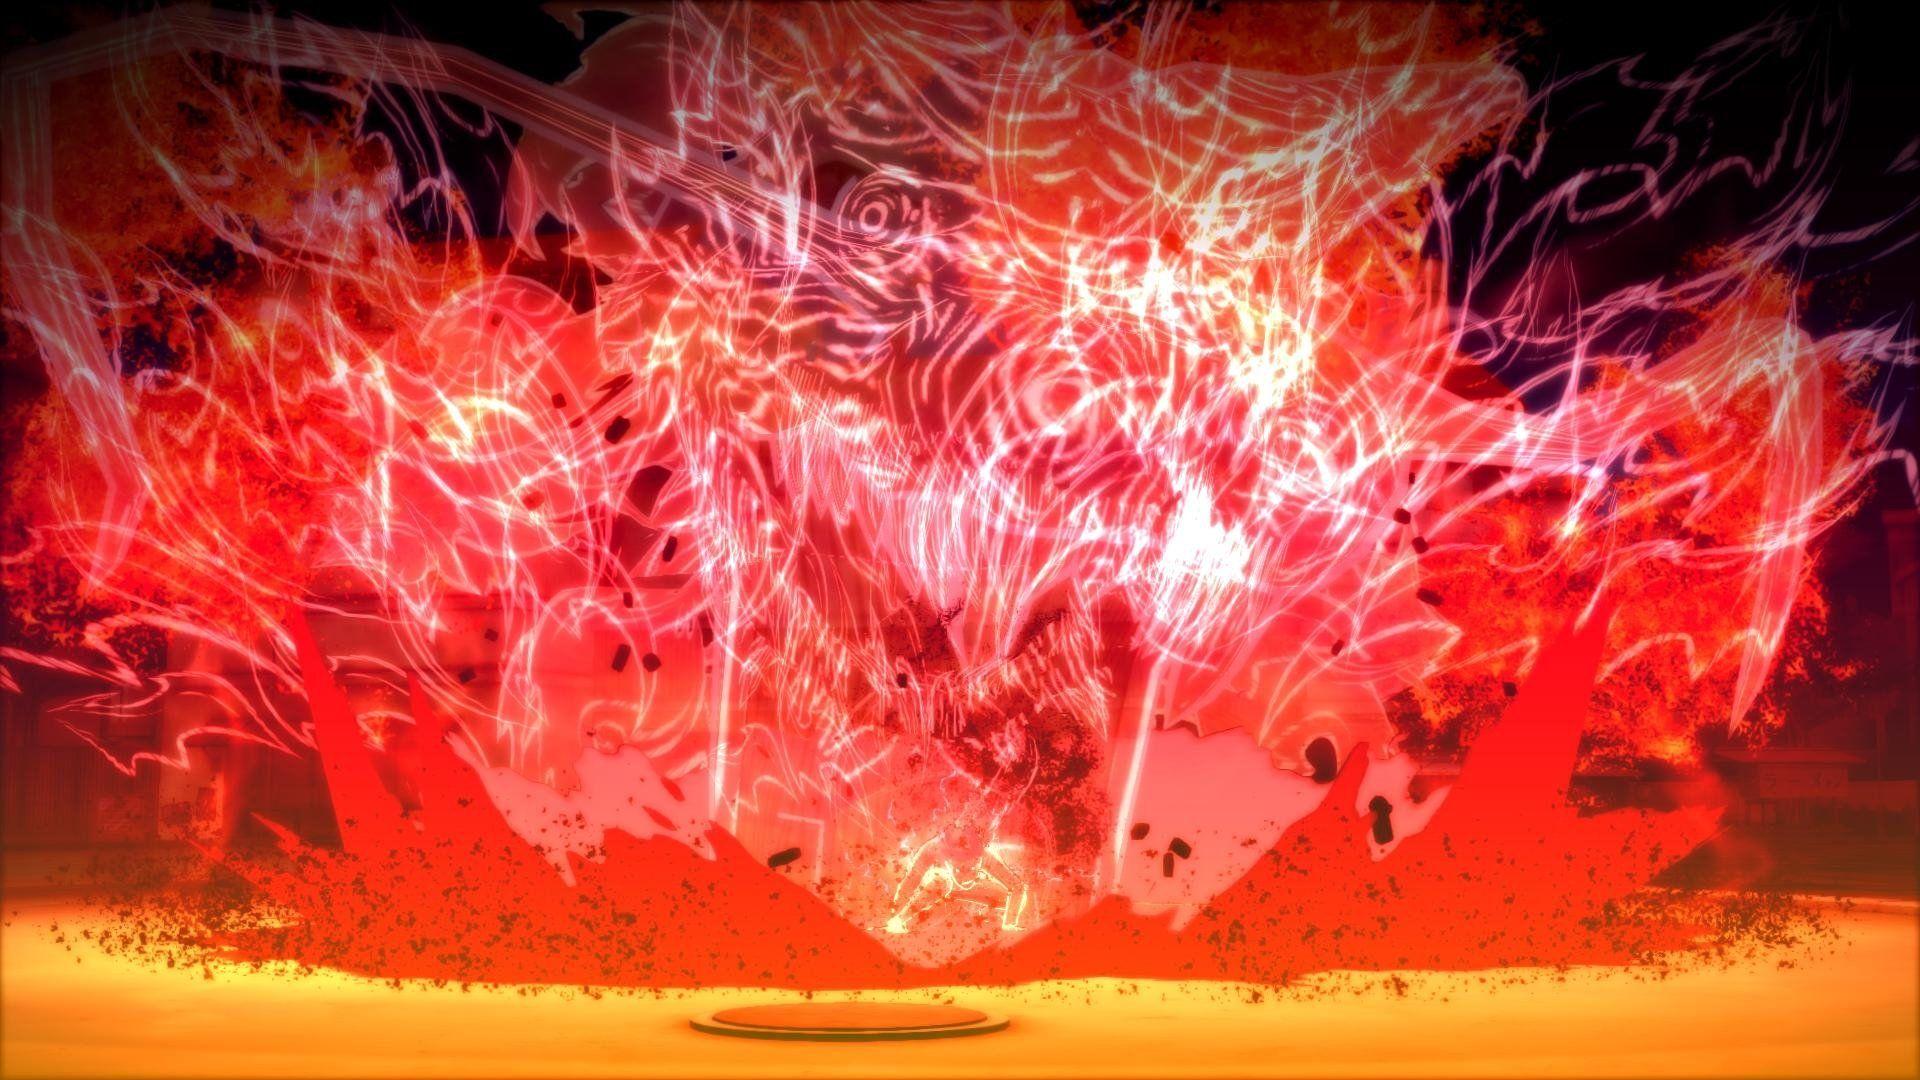 Naruto Shippuden: Ultimate Ninja Storm 4 HD Wallpaper and Background Image